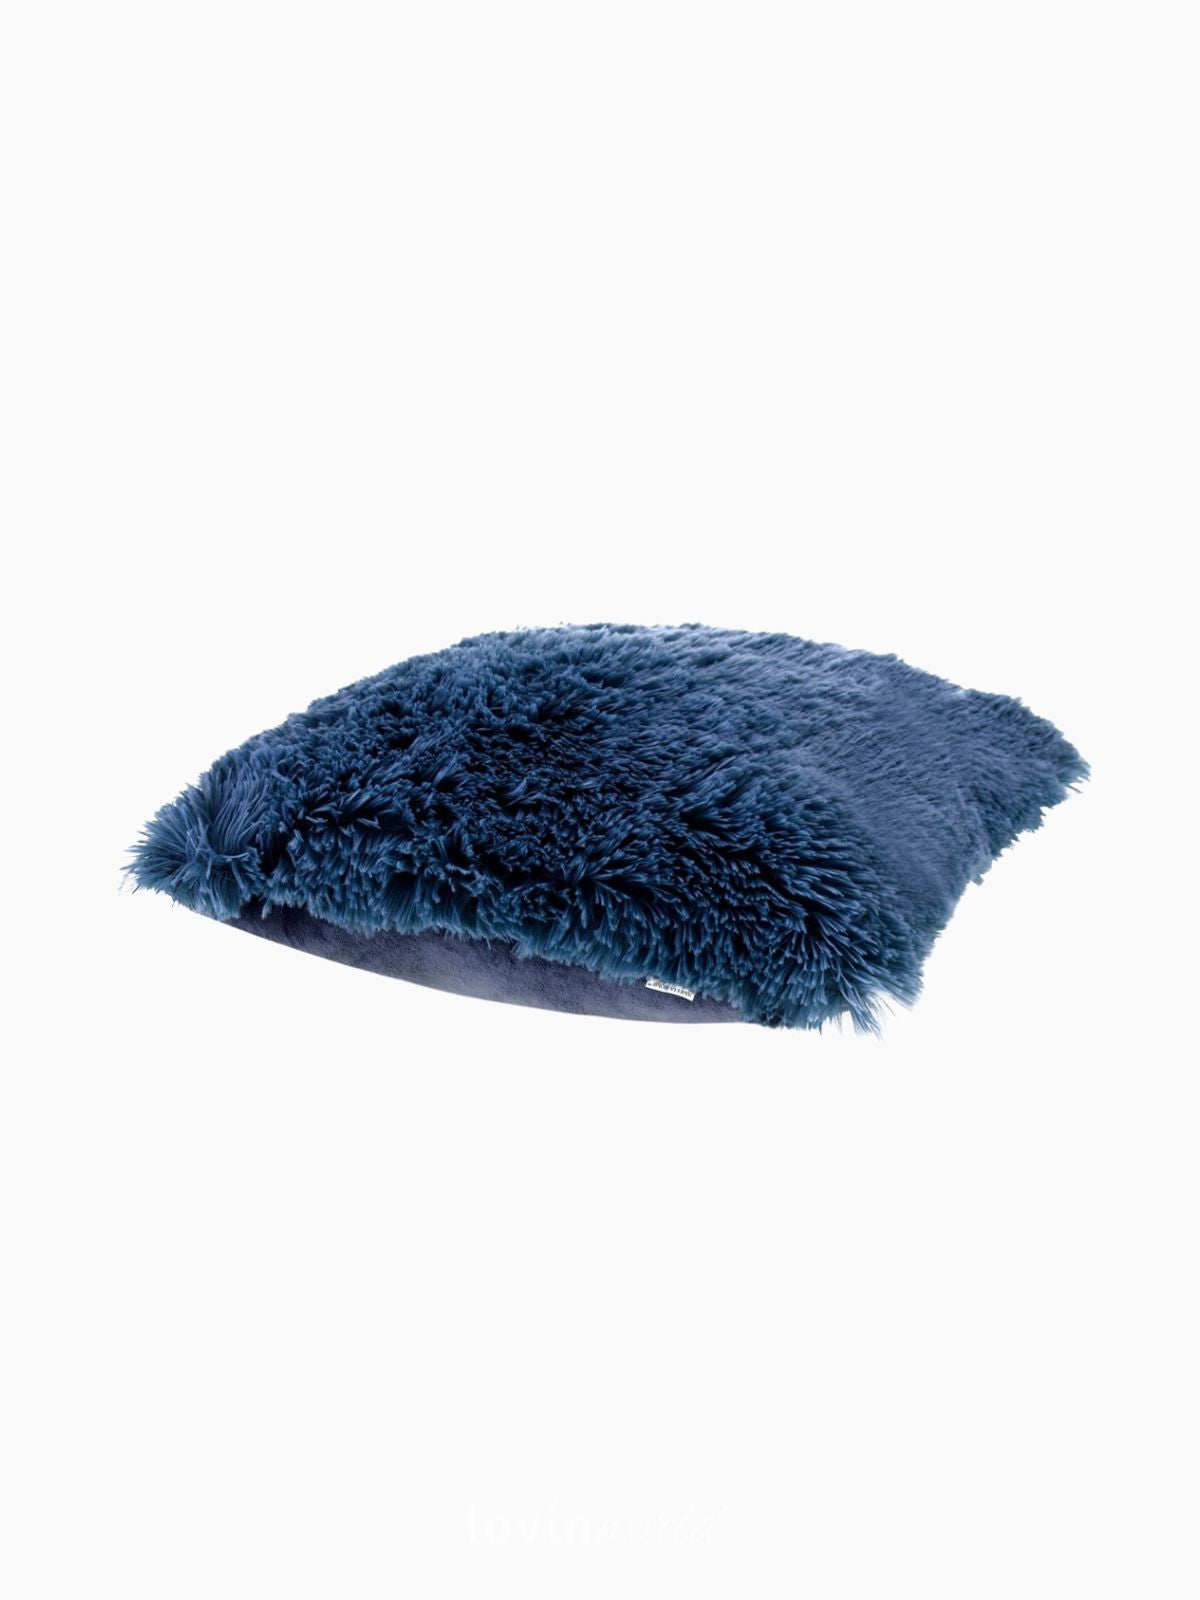 2 Federe per cuscino Karvag in colore blu scuro 45x45 cm.-2